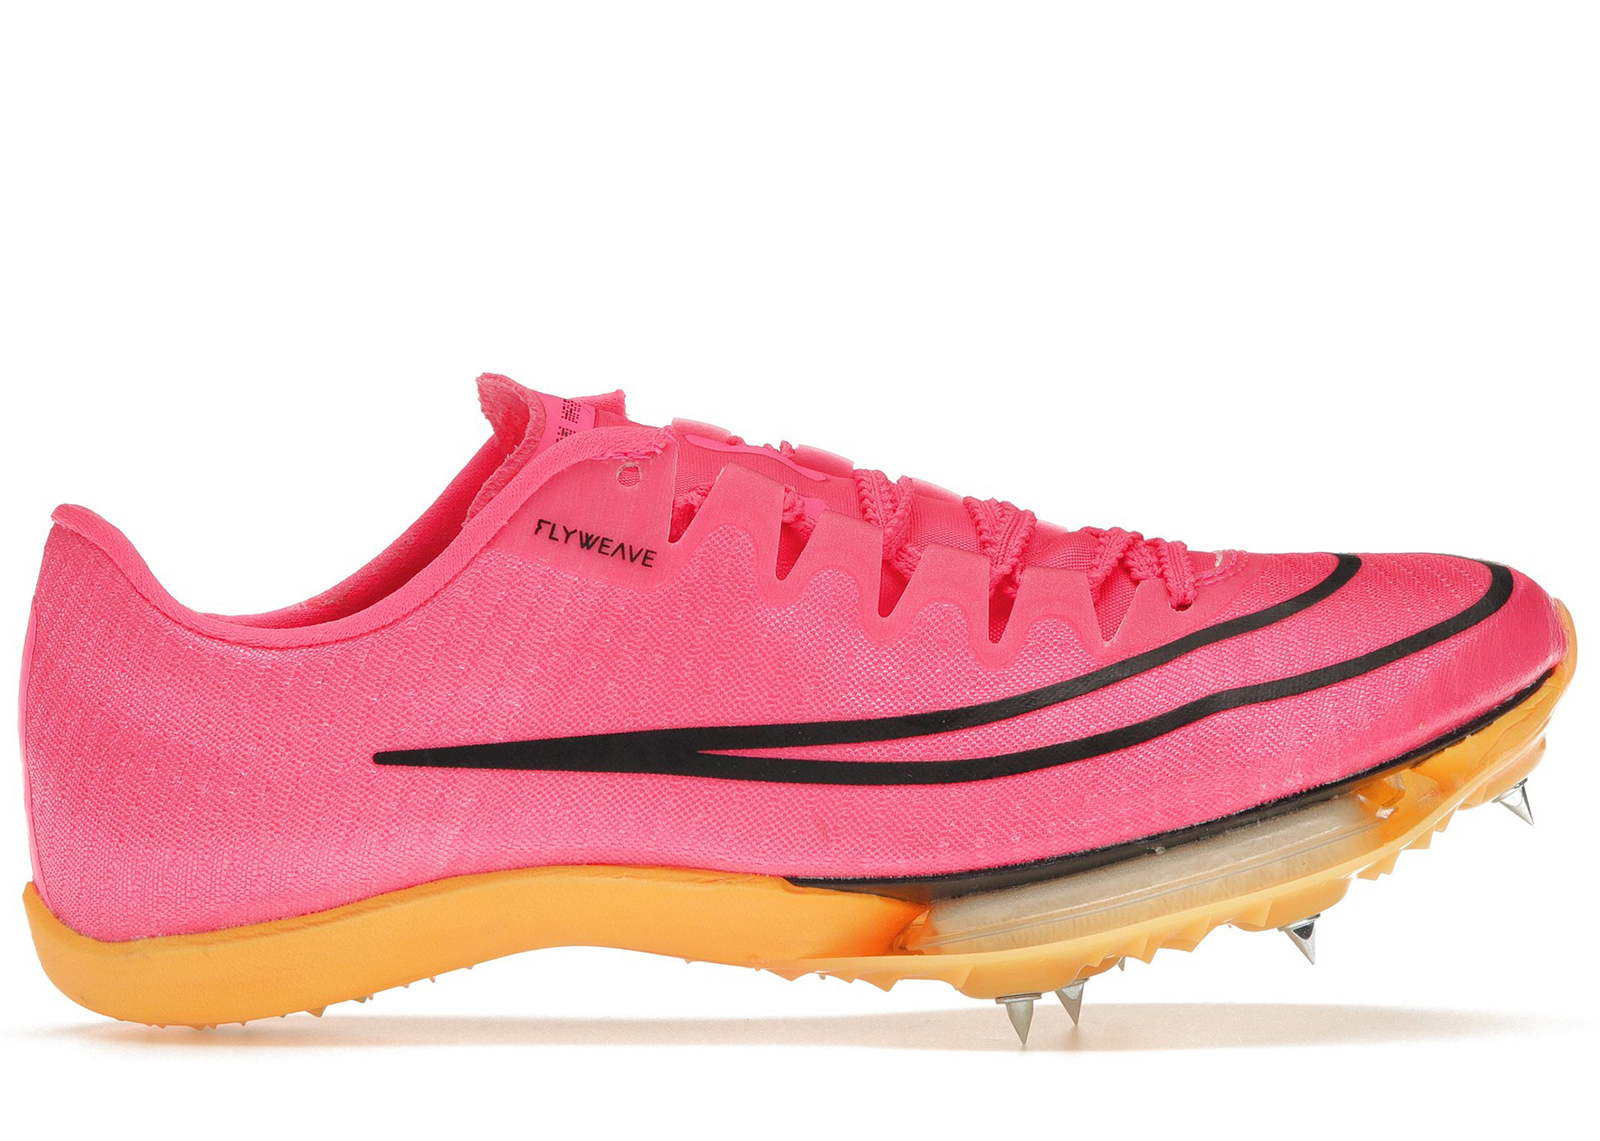 Nike Air Zoom Maxfly Hyper Pink Laser Orange Men's - DH5359-600 - US